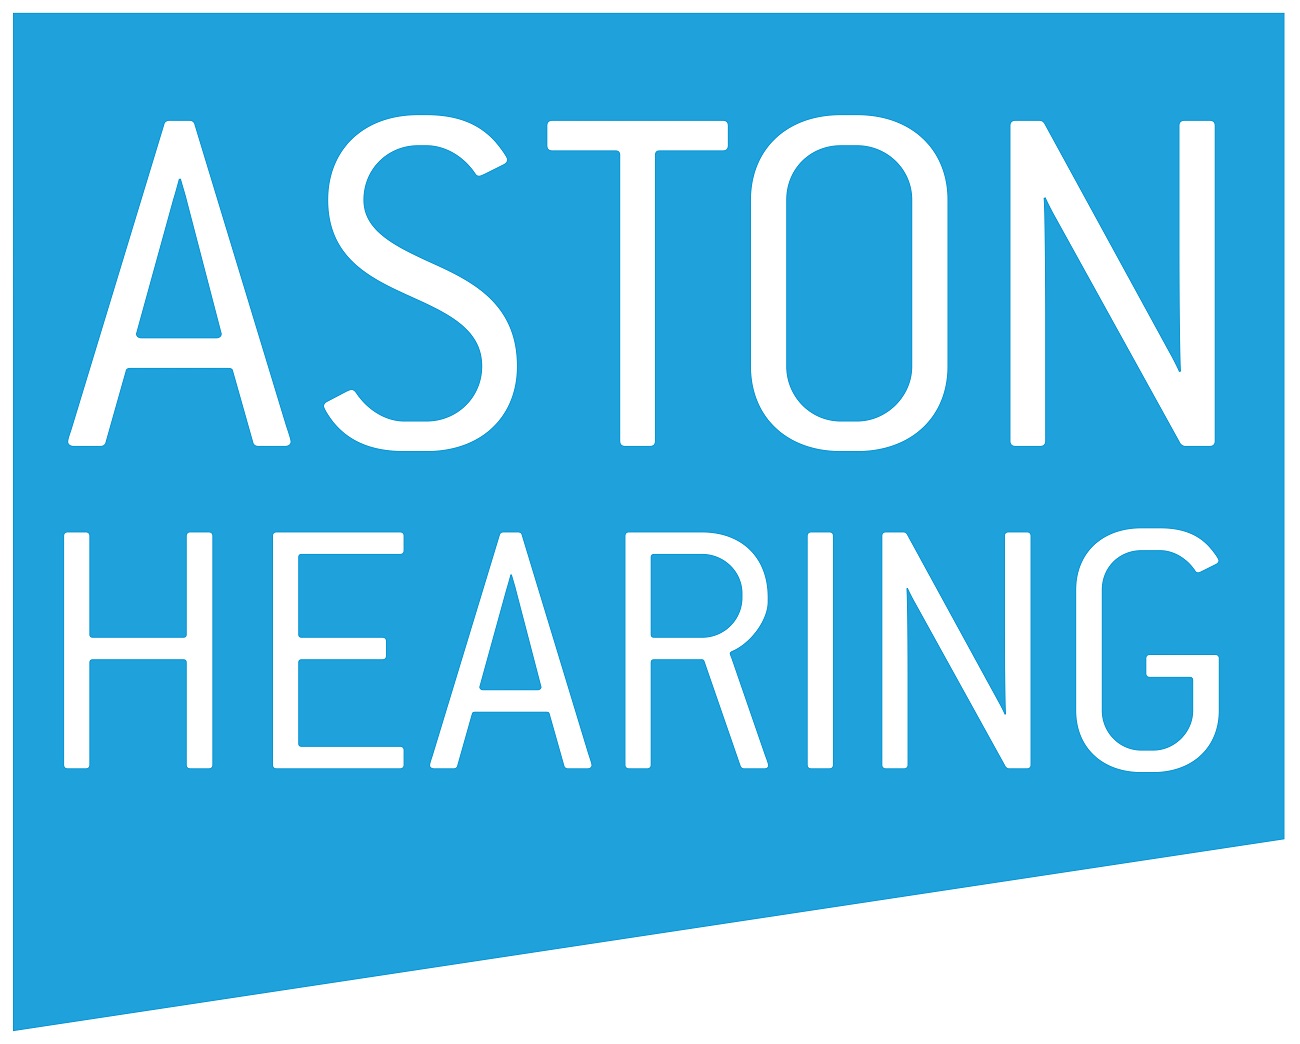 Aston Hearing logo. Blue background with white writing